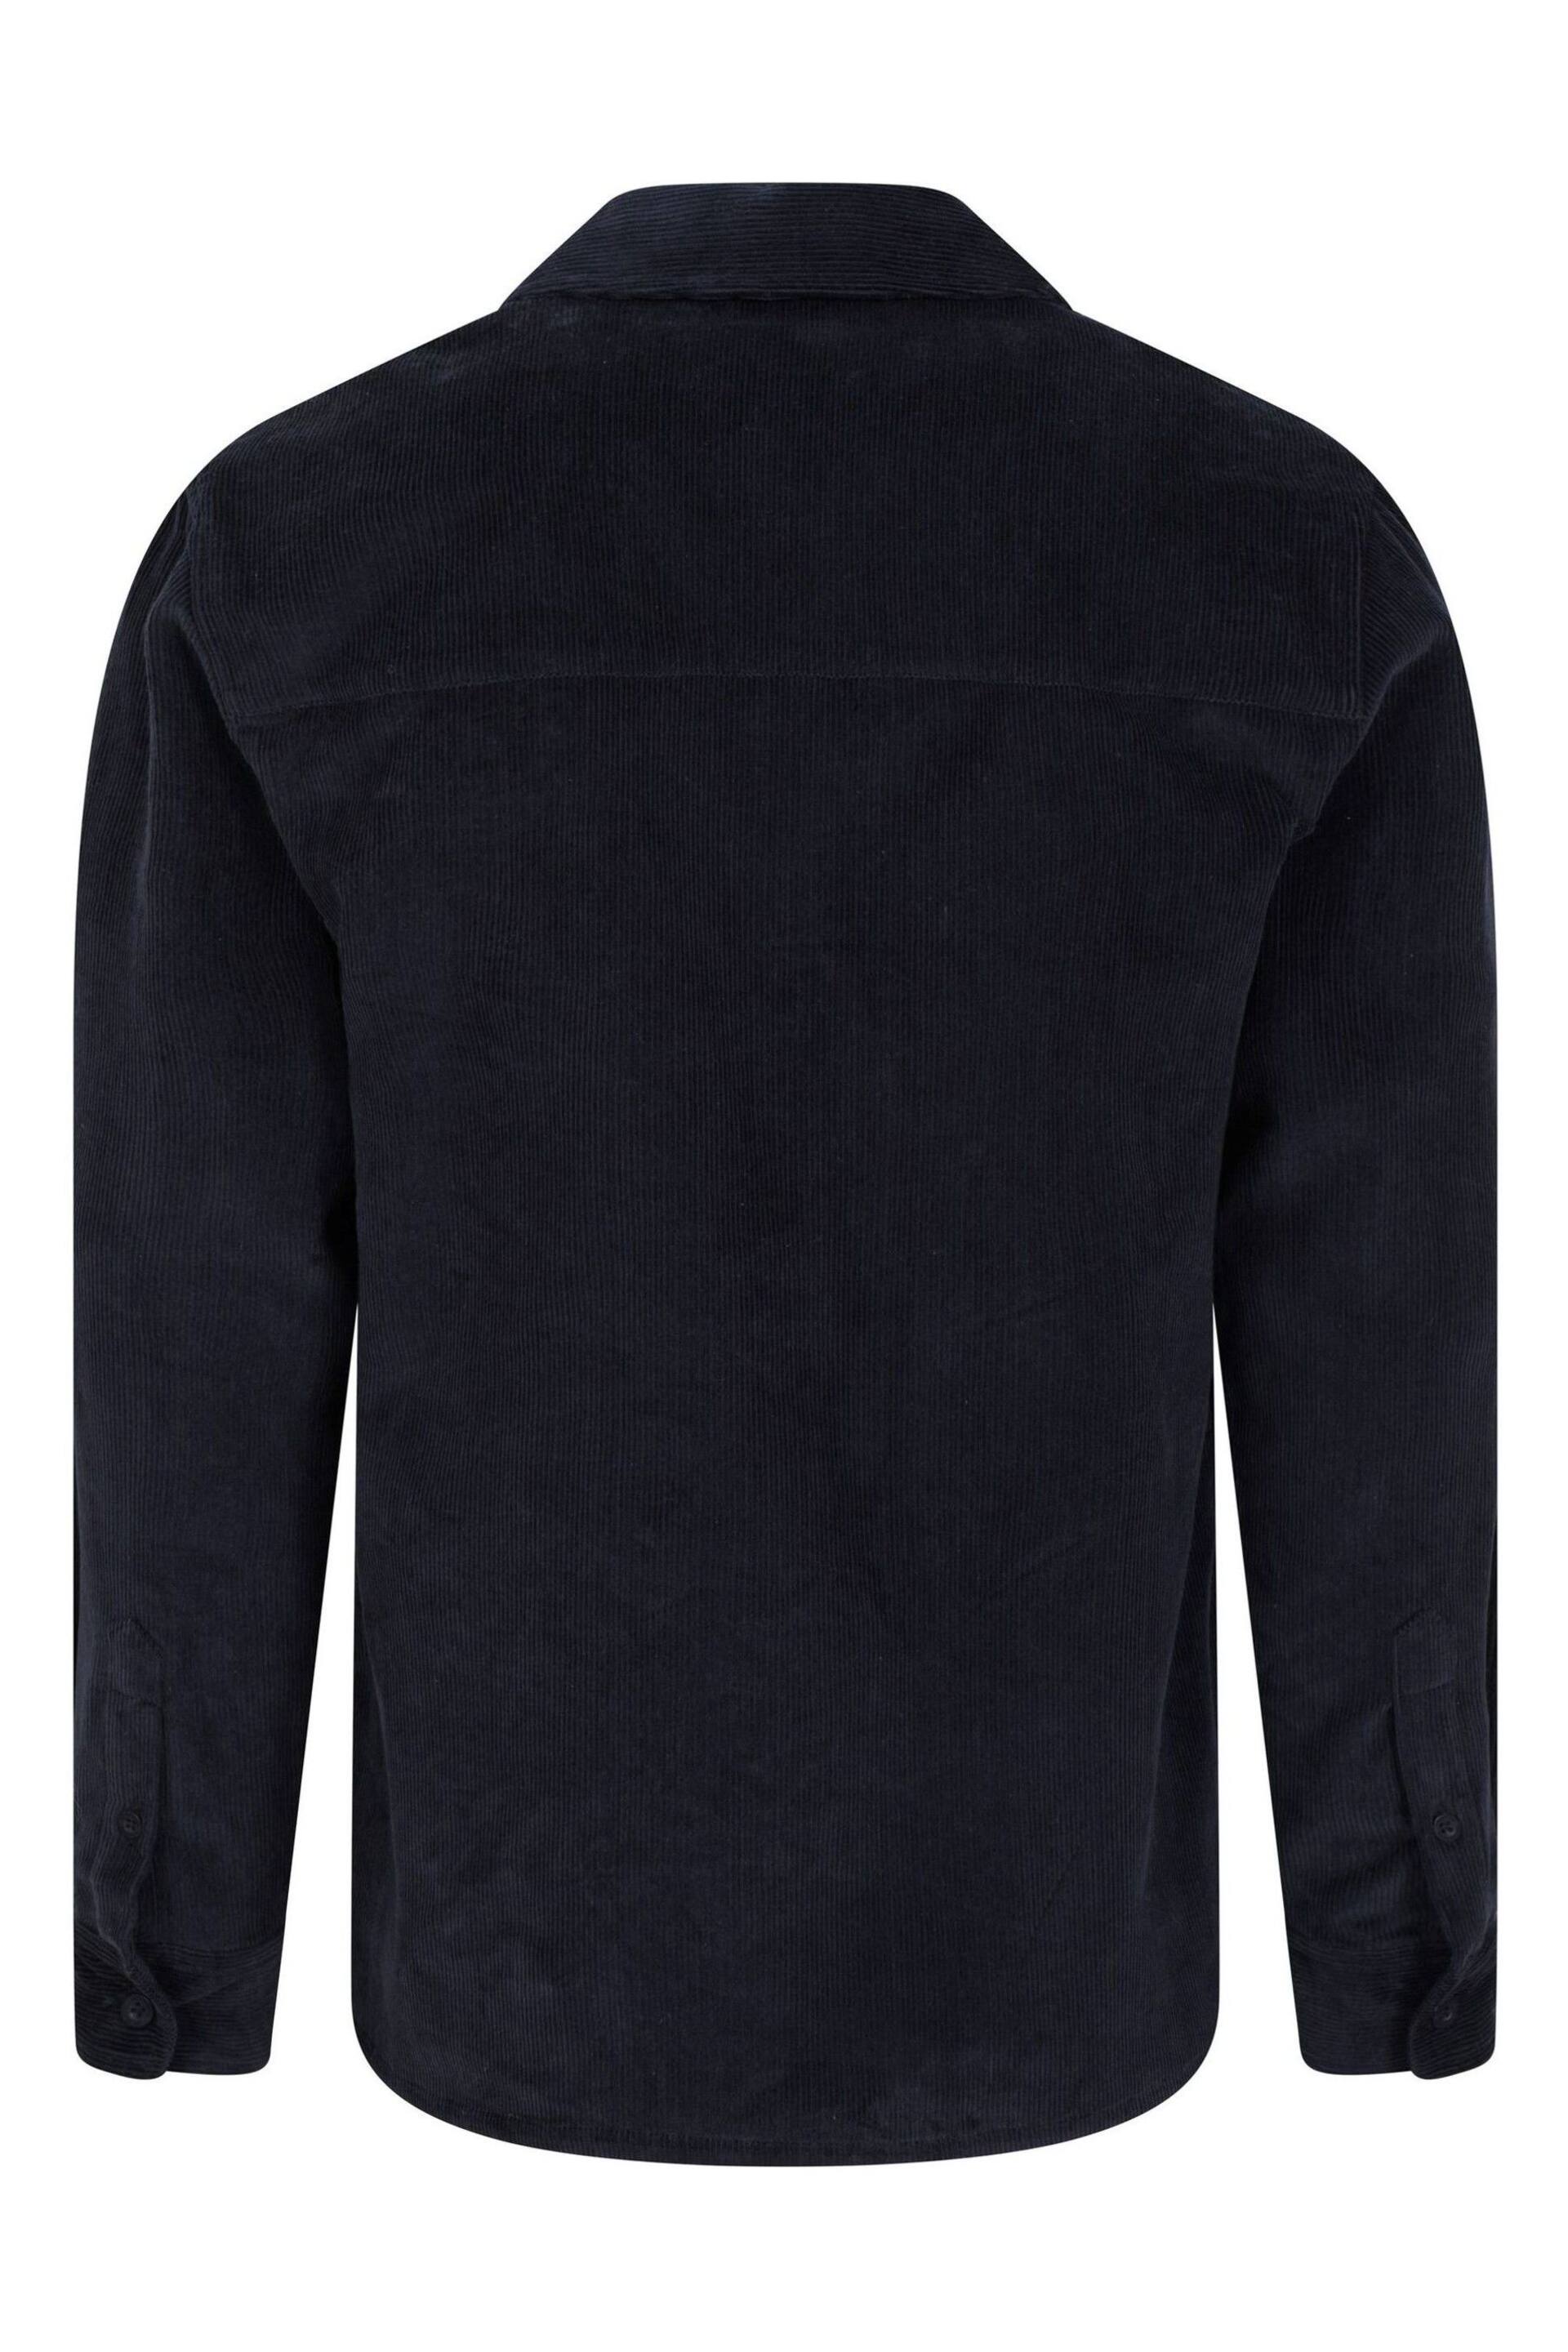 Mountain Warehouse Blue Dark Mens Farrow Cord Long Sleeve Shirt - Image 4 of 6